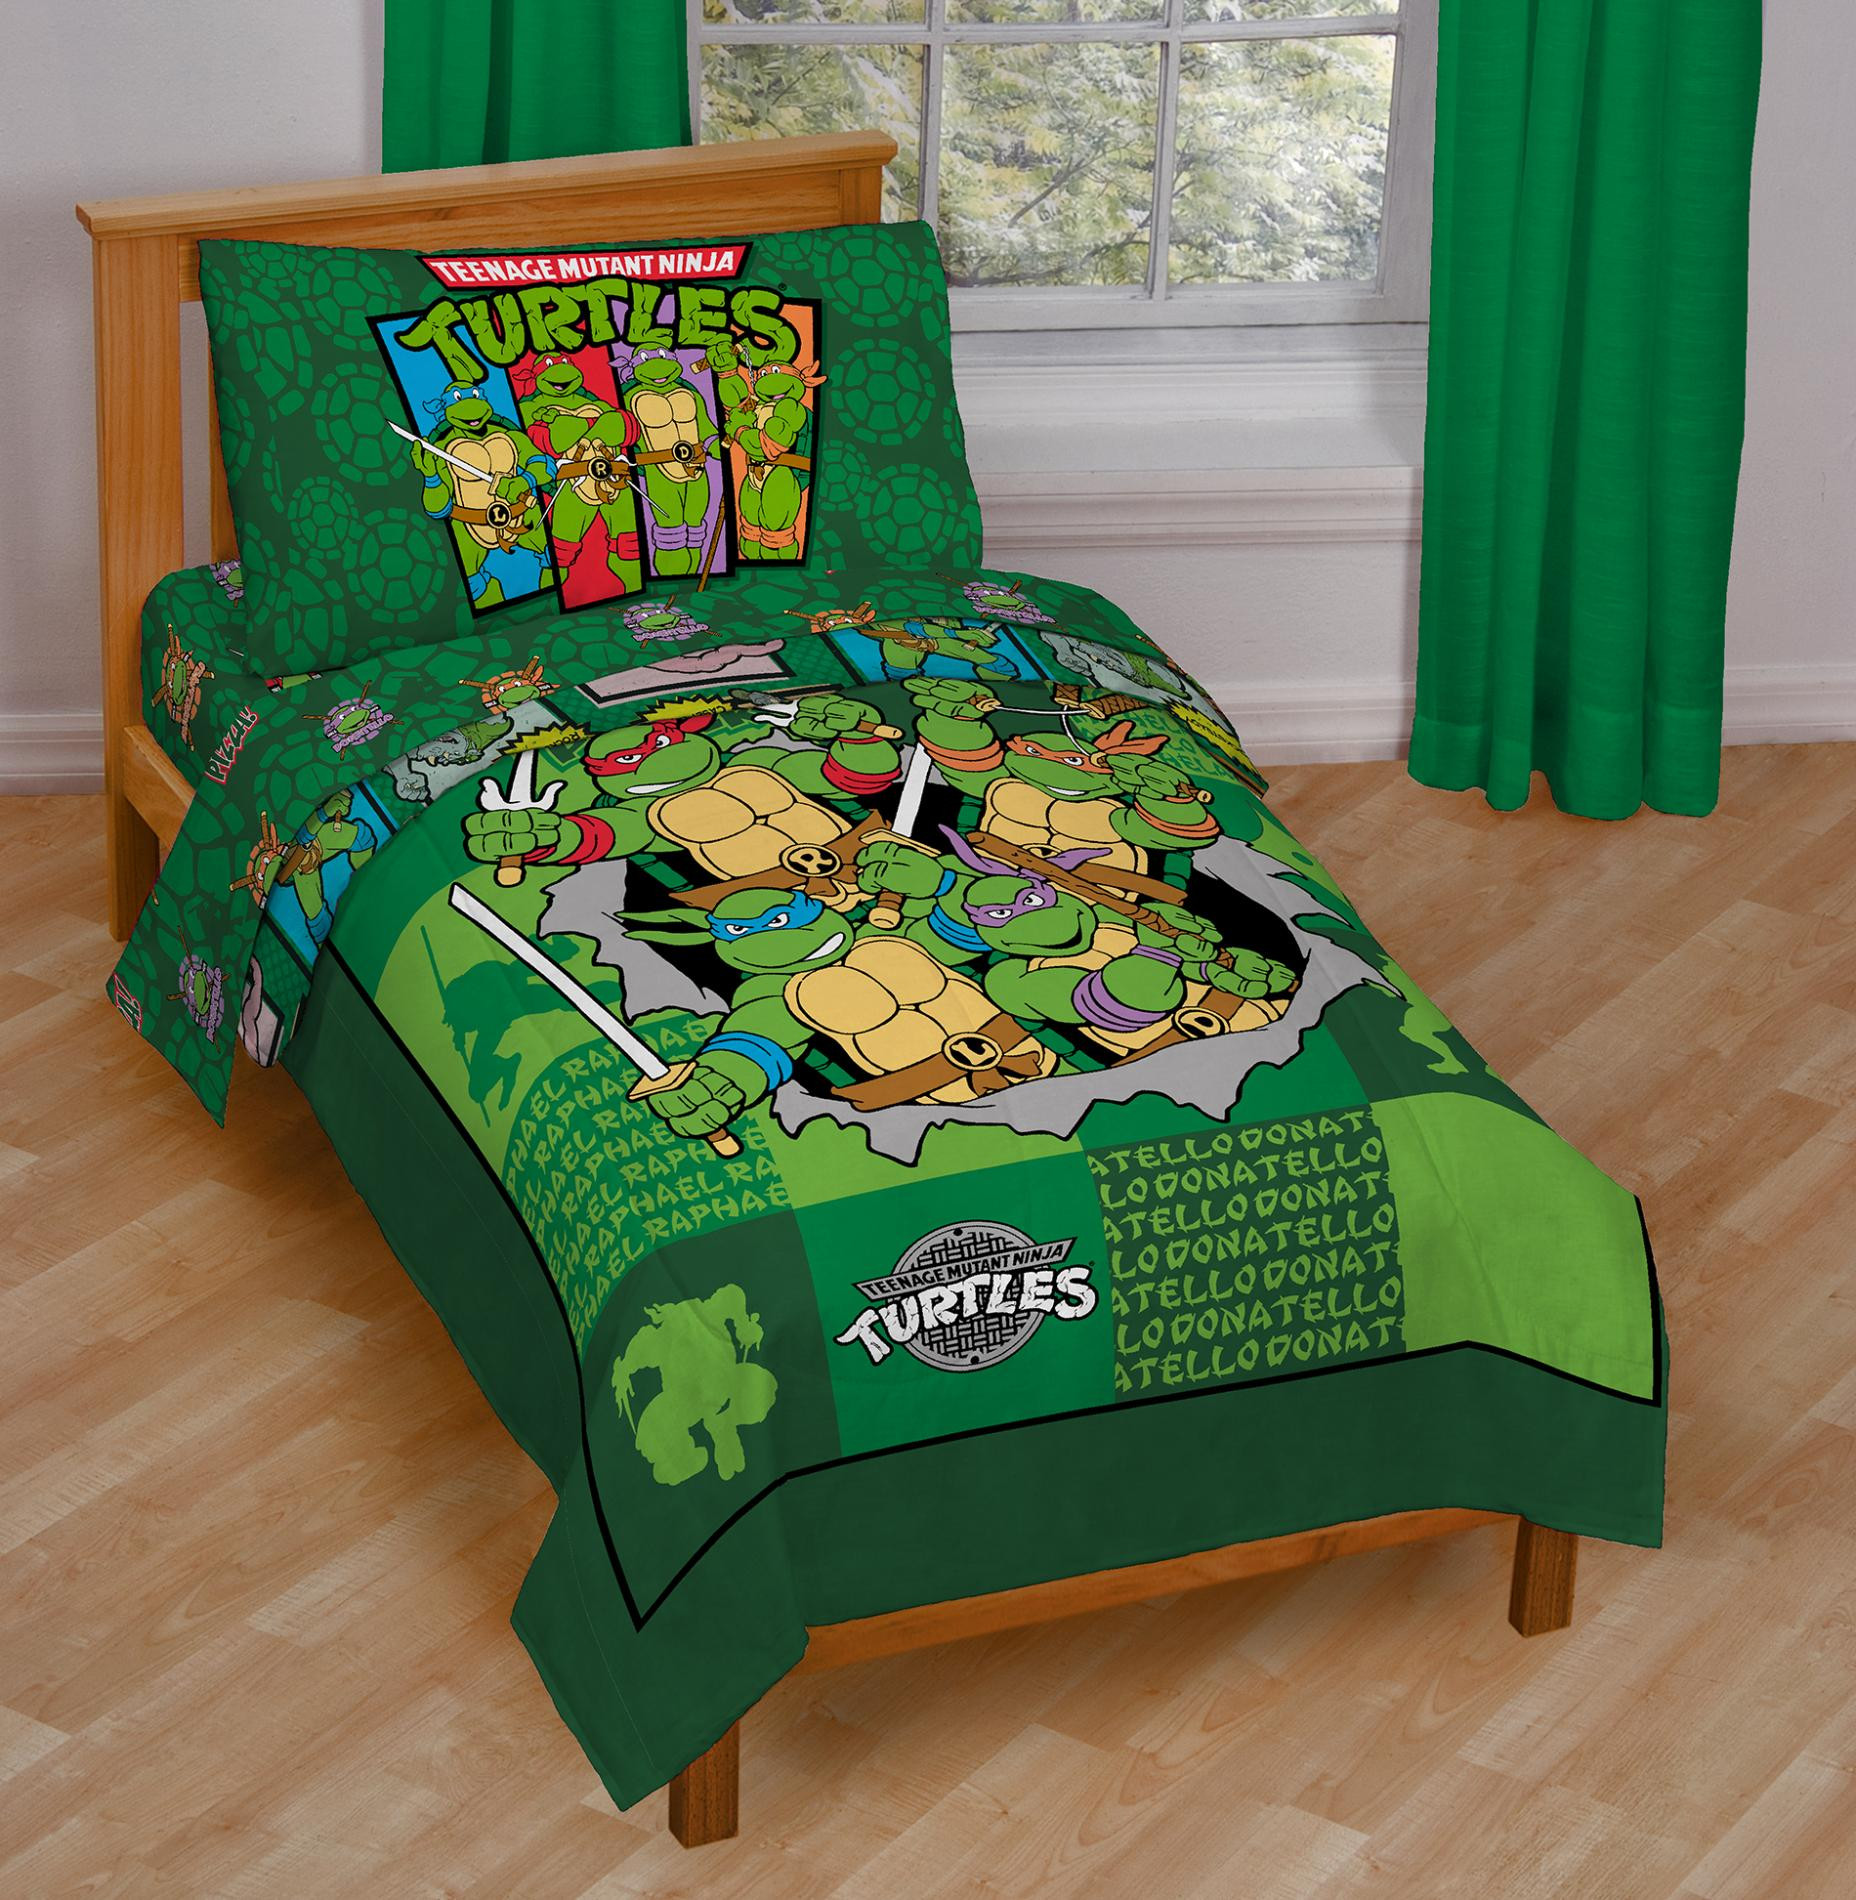 Toddler Bedroom Sets For Boys
 Nickelodeon Toddler Boy s 4 Piece Bedding Set